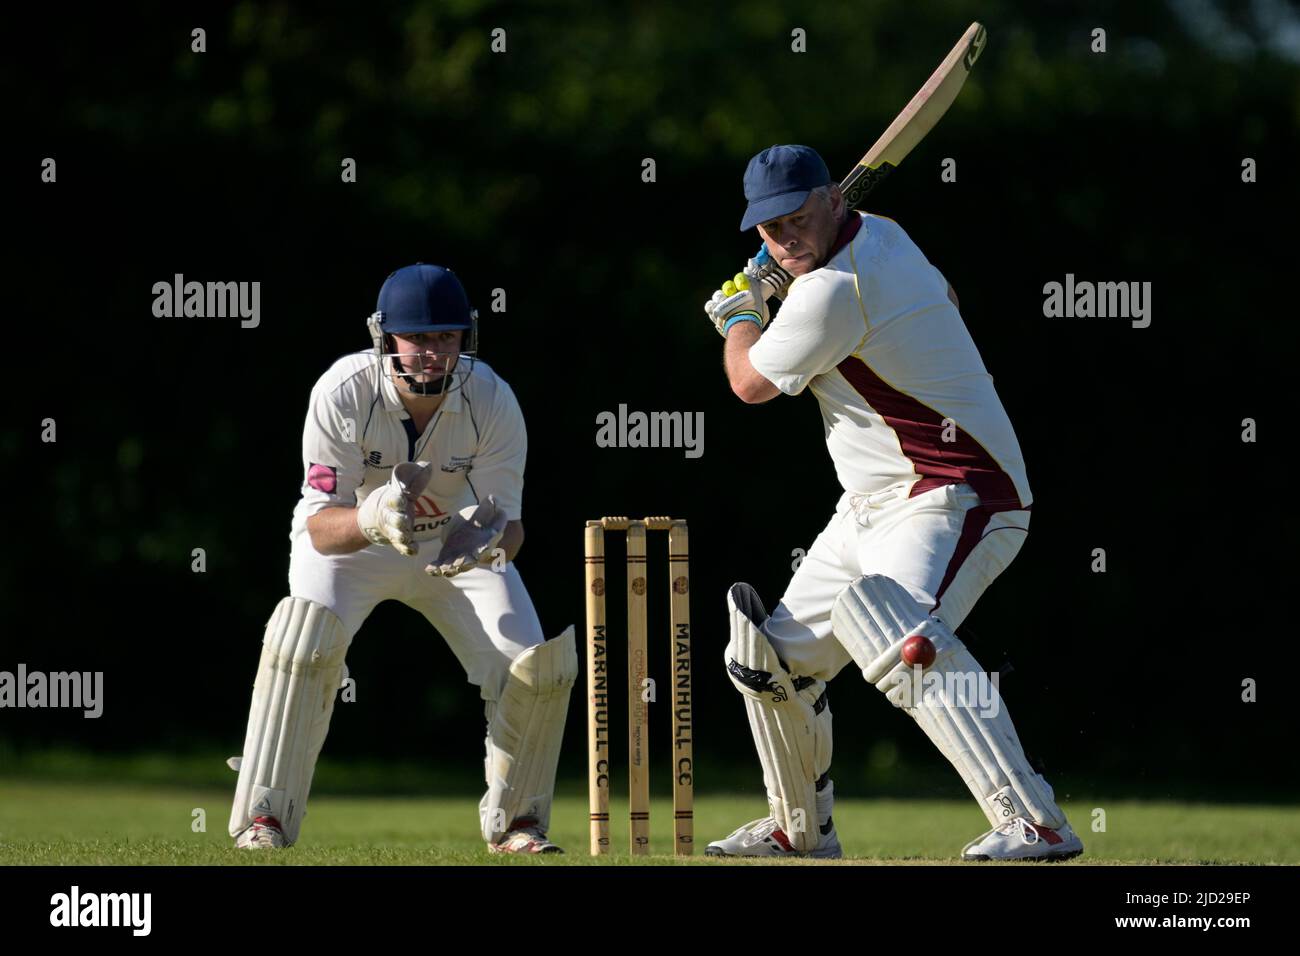 Cricket batsman in action. Stock Photo